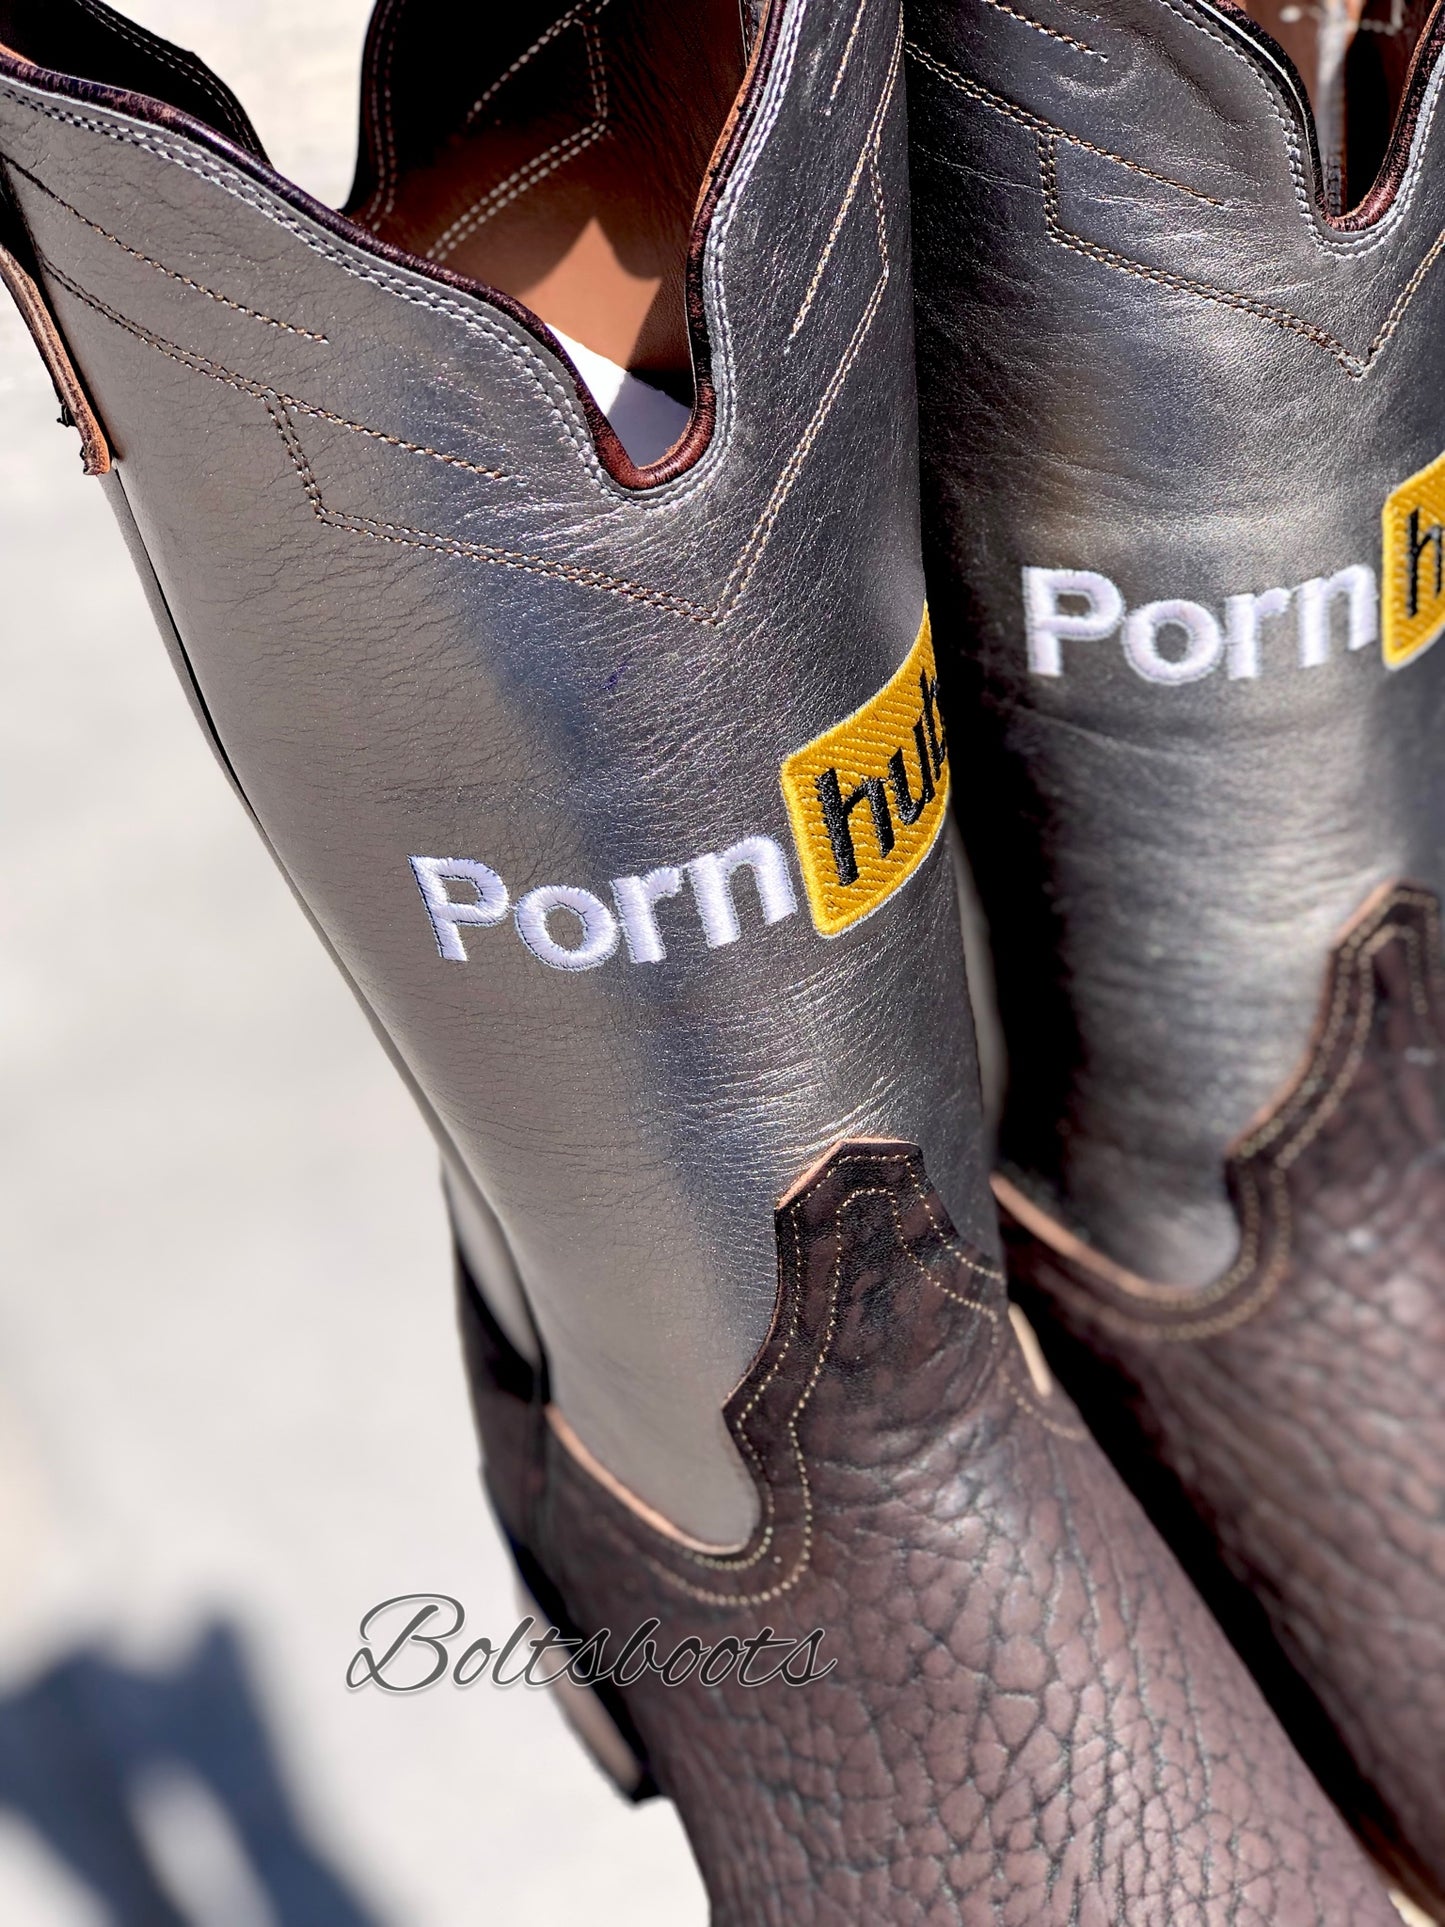 Porn hub bullhide boots by Boltsbootsbrand